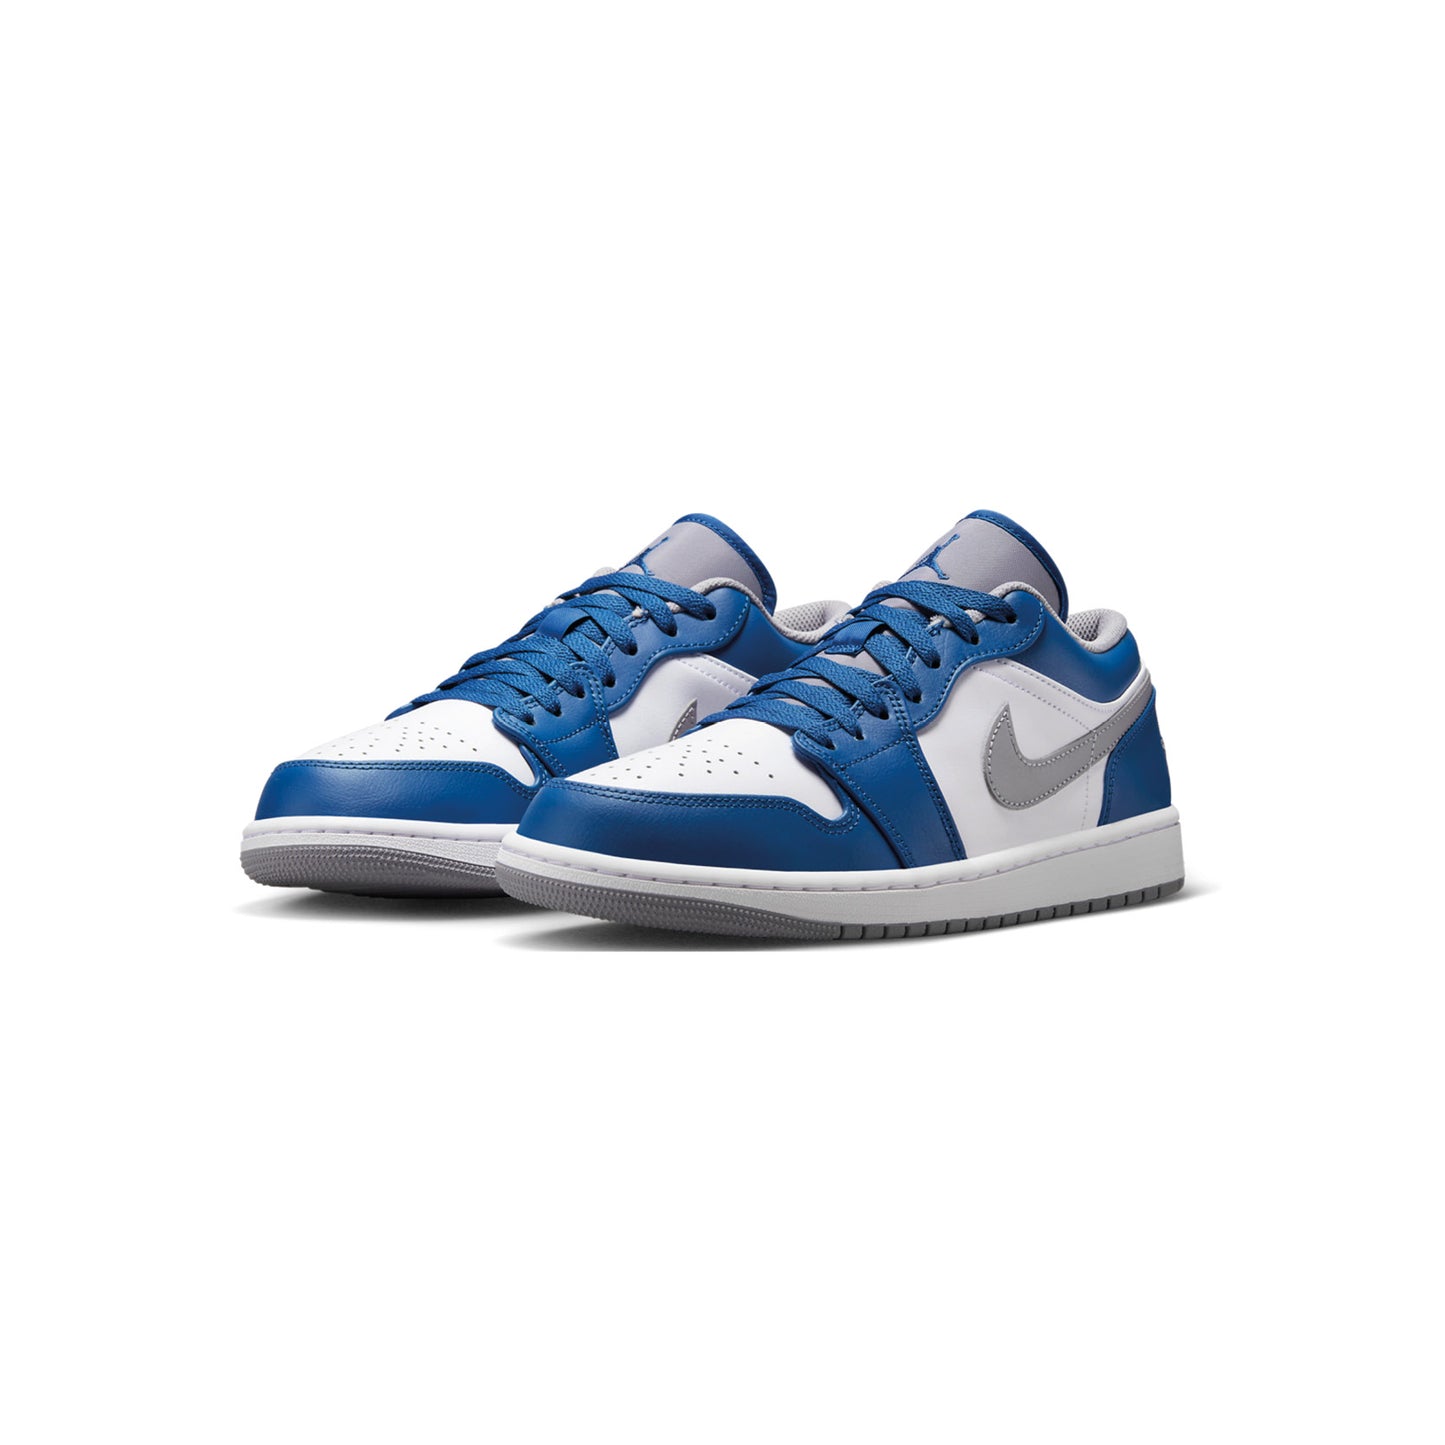 Nike Air Jordan 1 Low "True Blue"